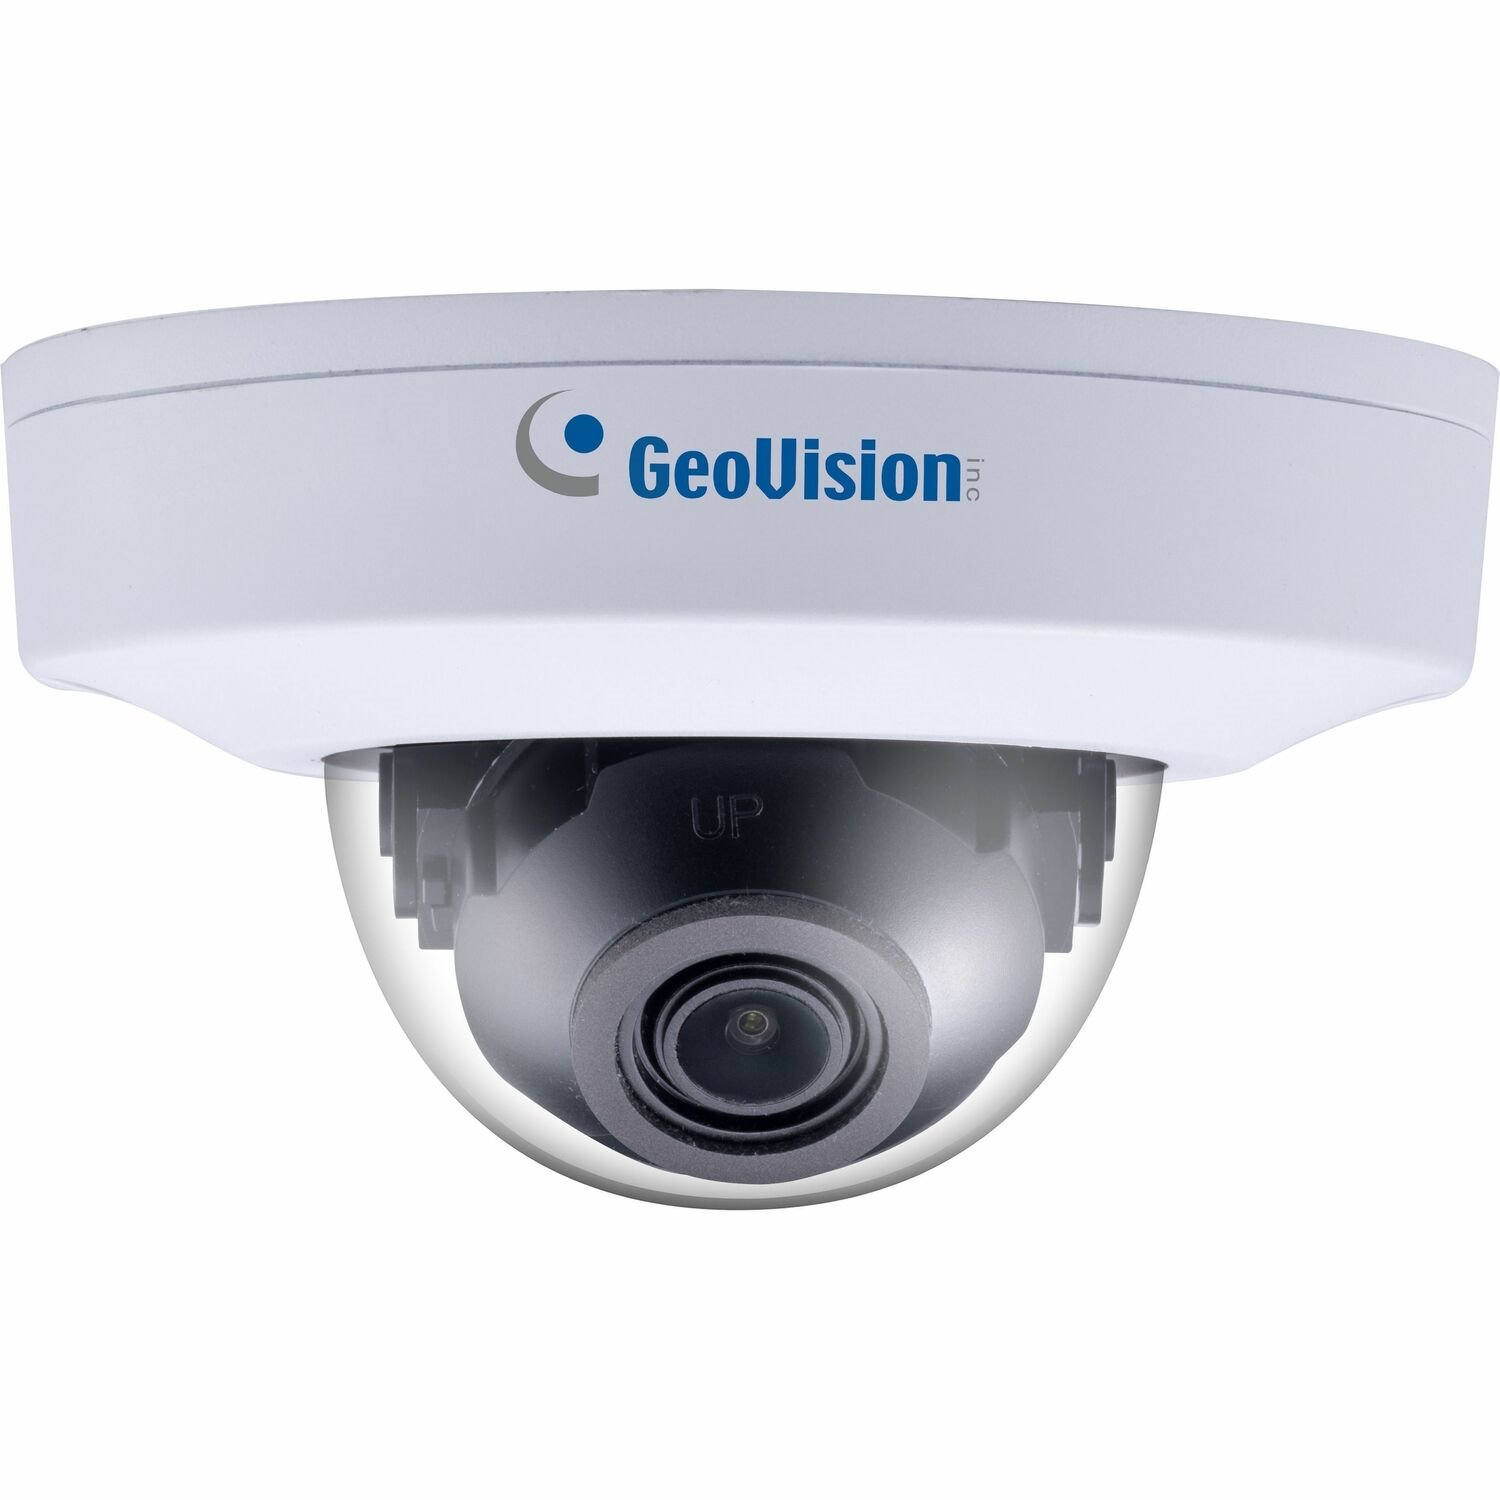 GeoVision GV-TFD4800 4 Megapixel Indoor Network Camera - Color - Mini Dome